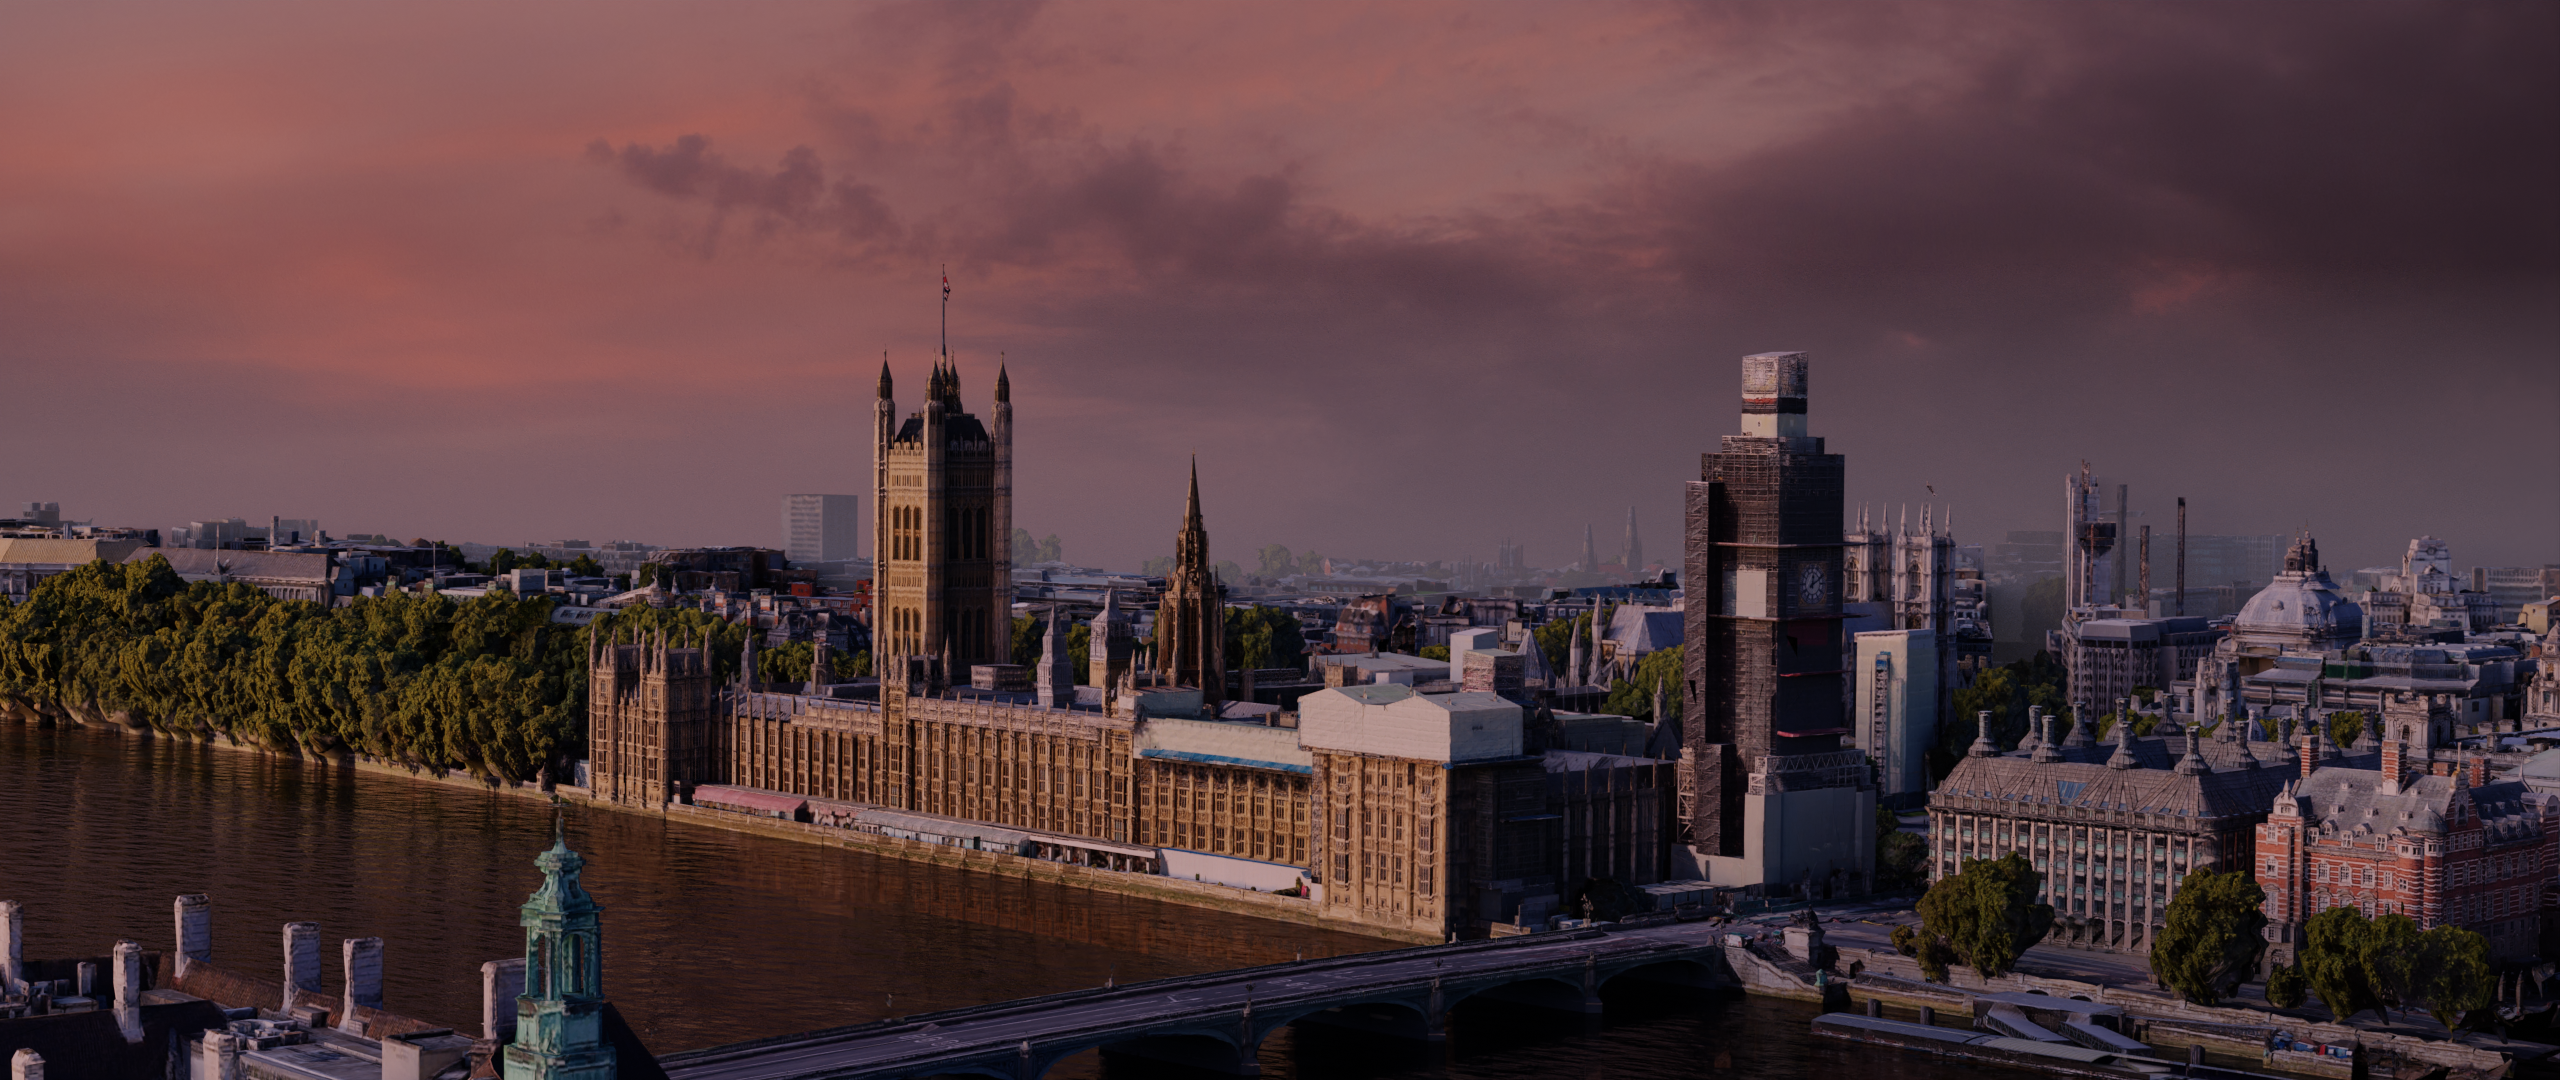 Big Ben | London  preview image 1